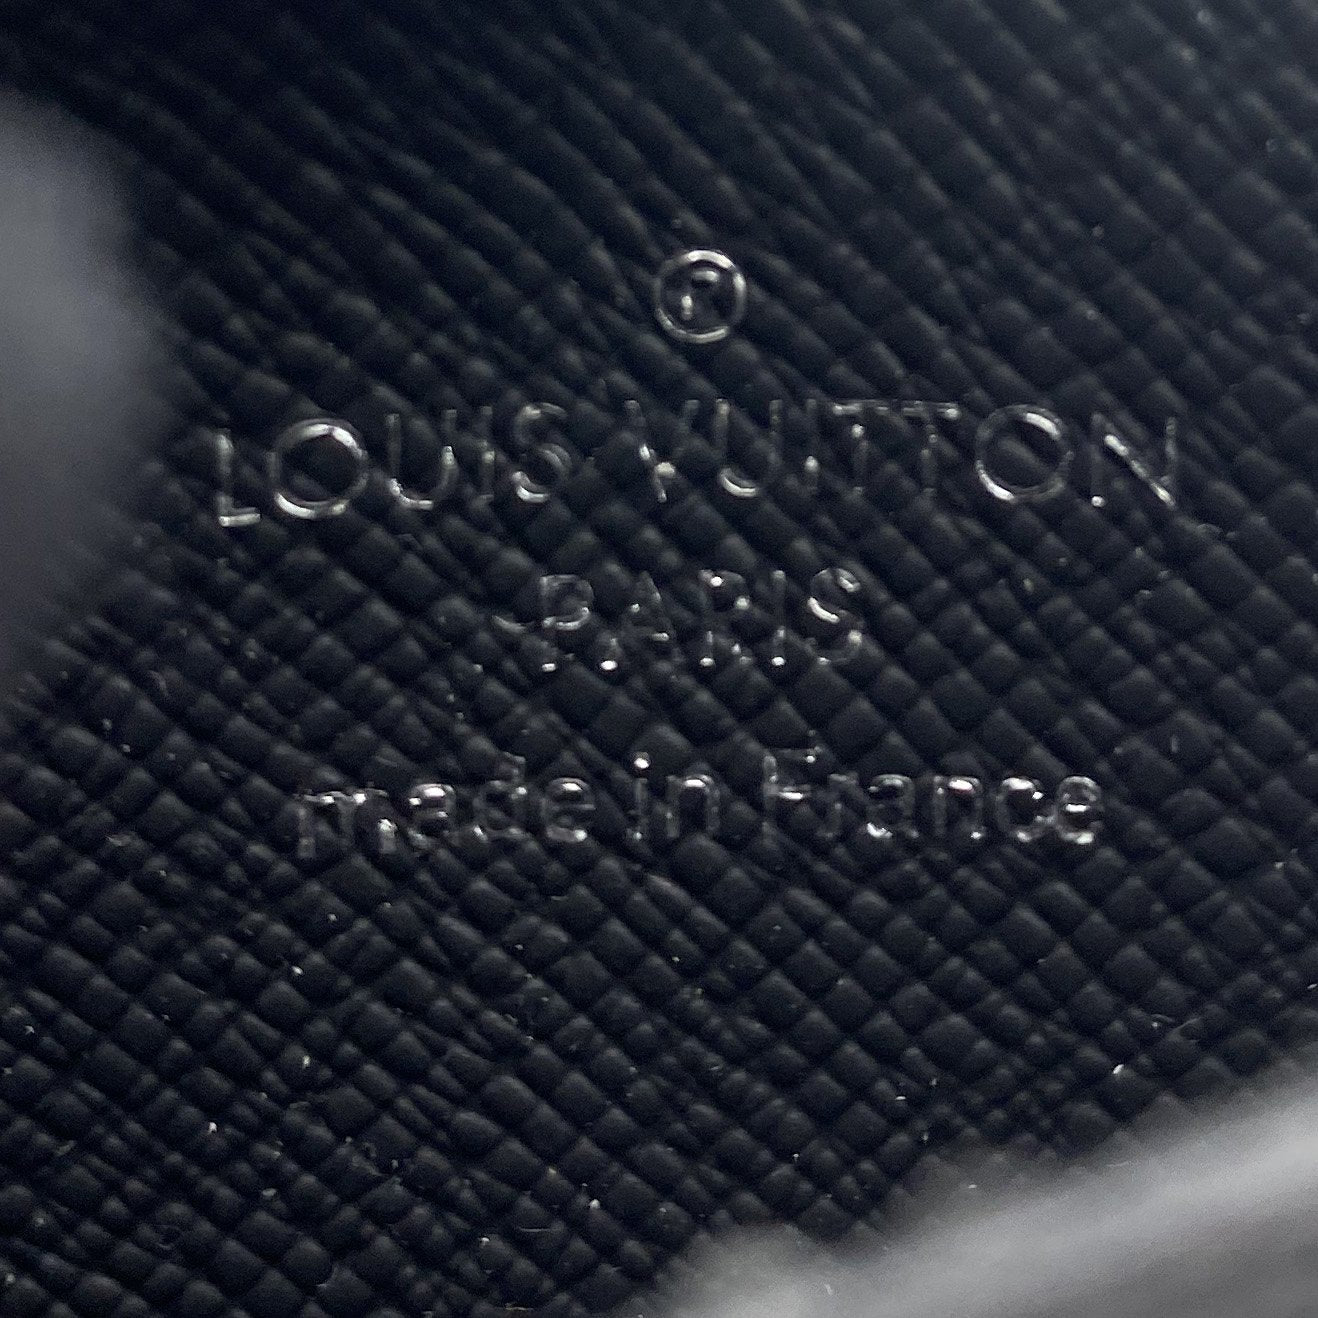 Louis Vuitton Slender Wallet Monogram Eclipse in Coated Canvas - US